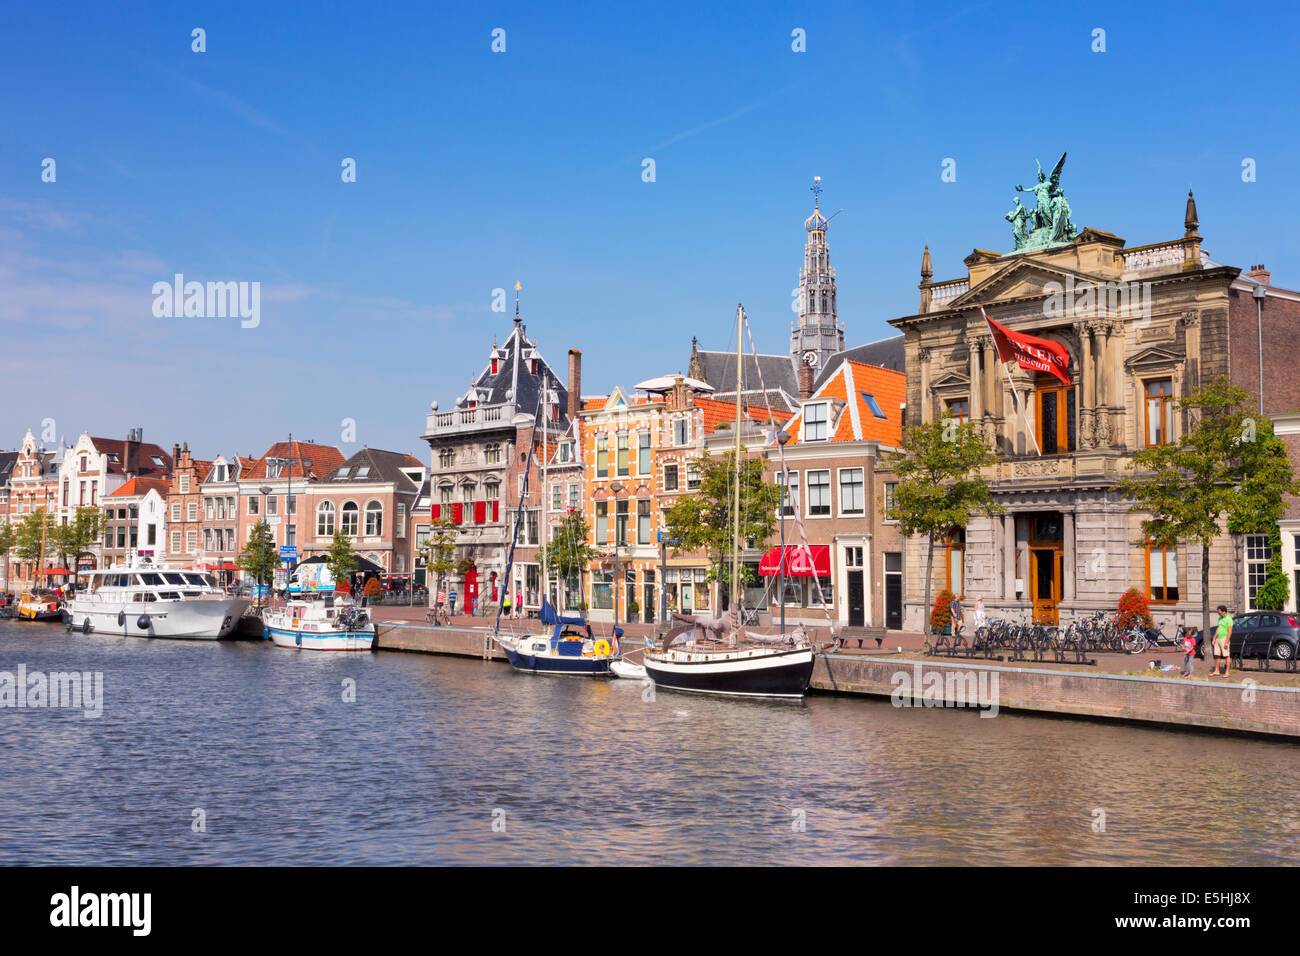 Die Stadt von Haarlem in den Niederlanden entlang des Flusses Spaarne Stockfoto